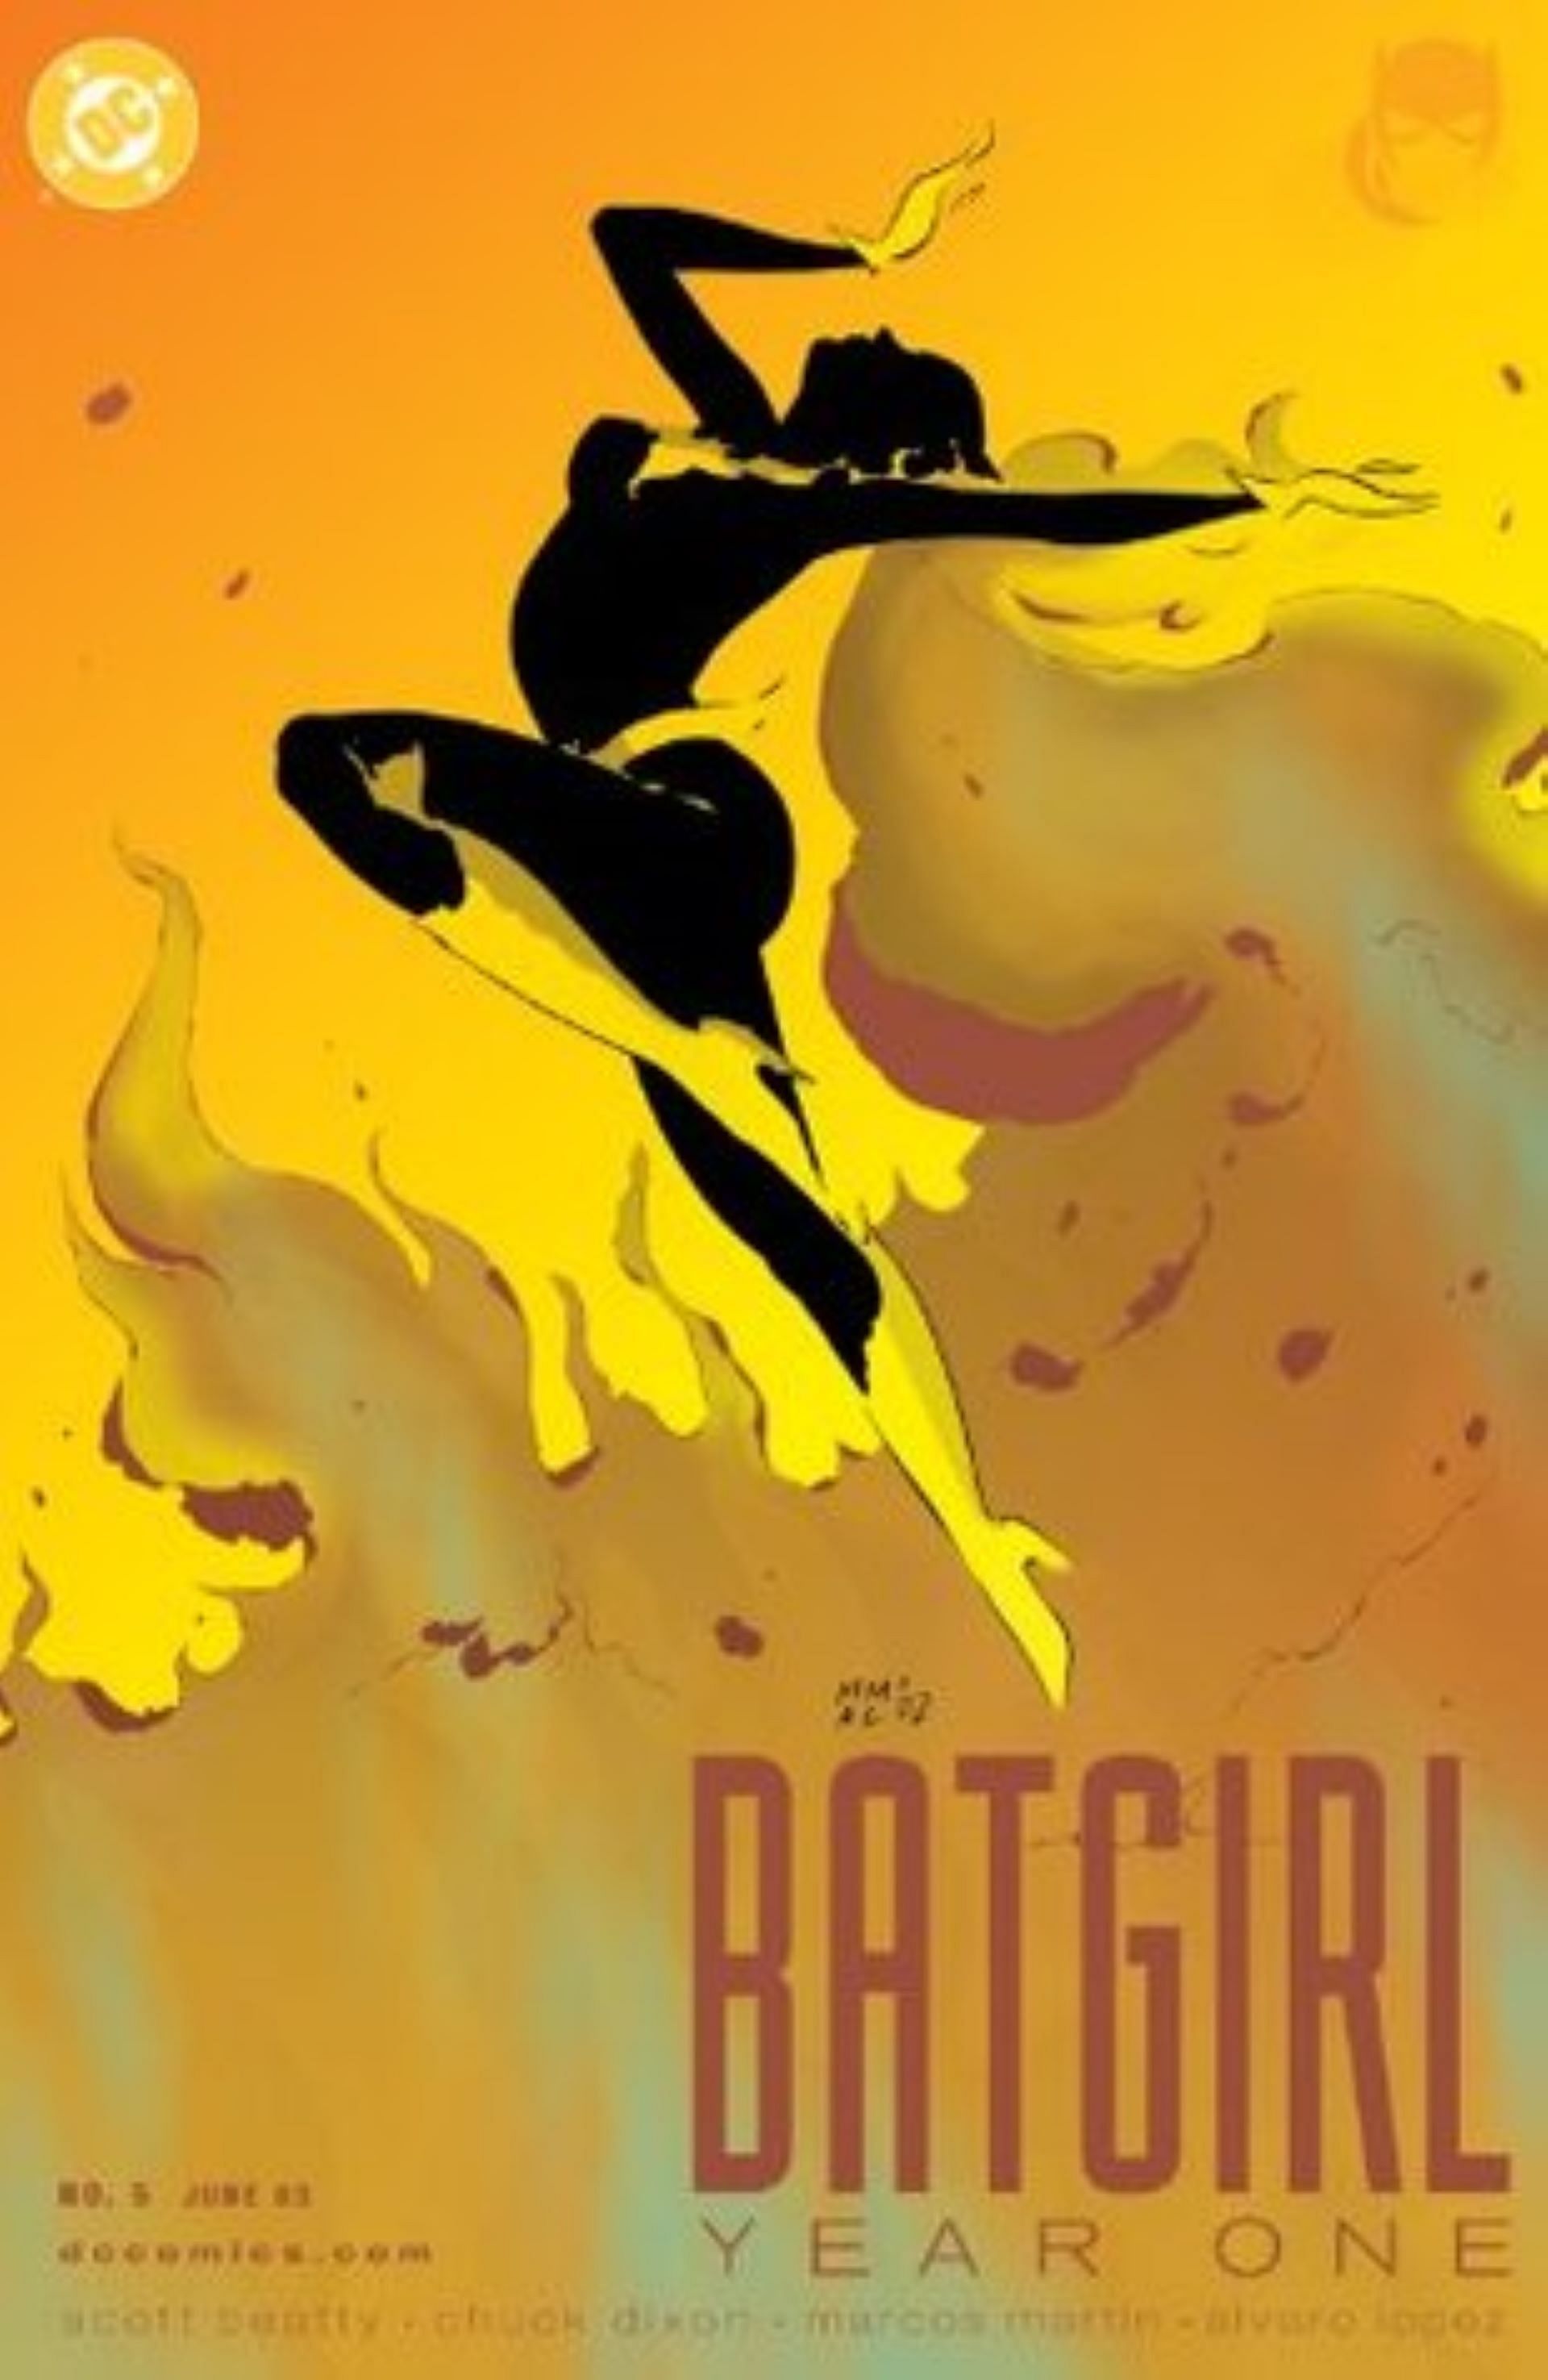 The storyline tells the origin story of Batgirl (Image via DC)